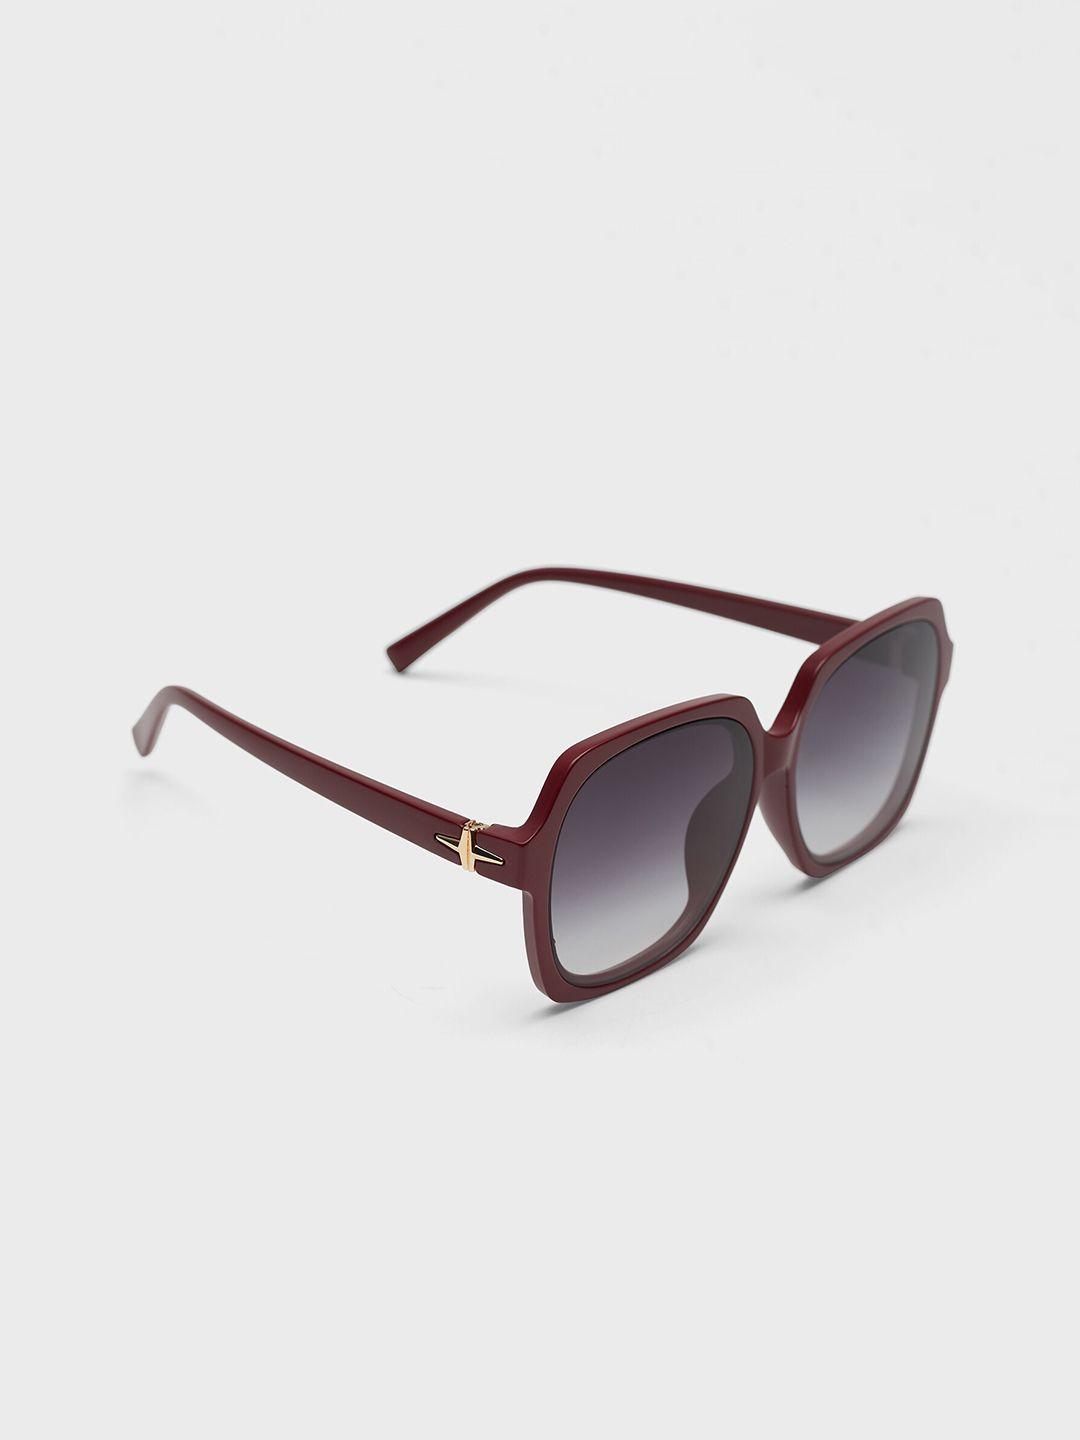 20dresses-women-square-acrylic-sunglasses-with-regular-lens-sg010791